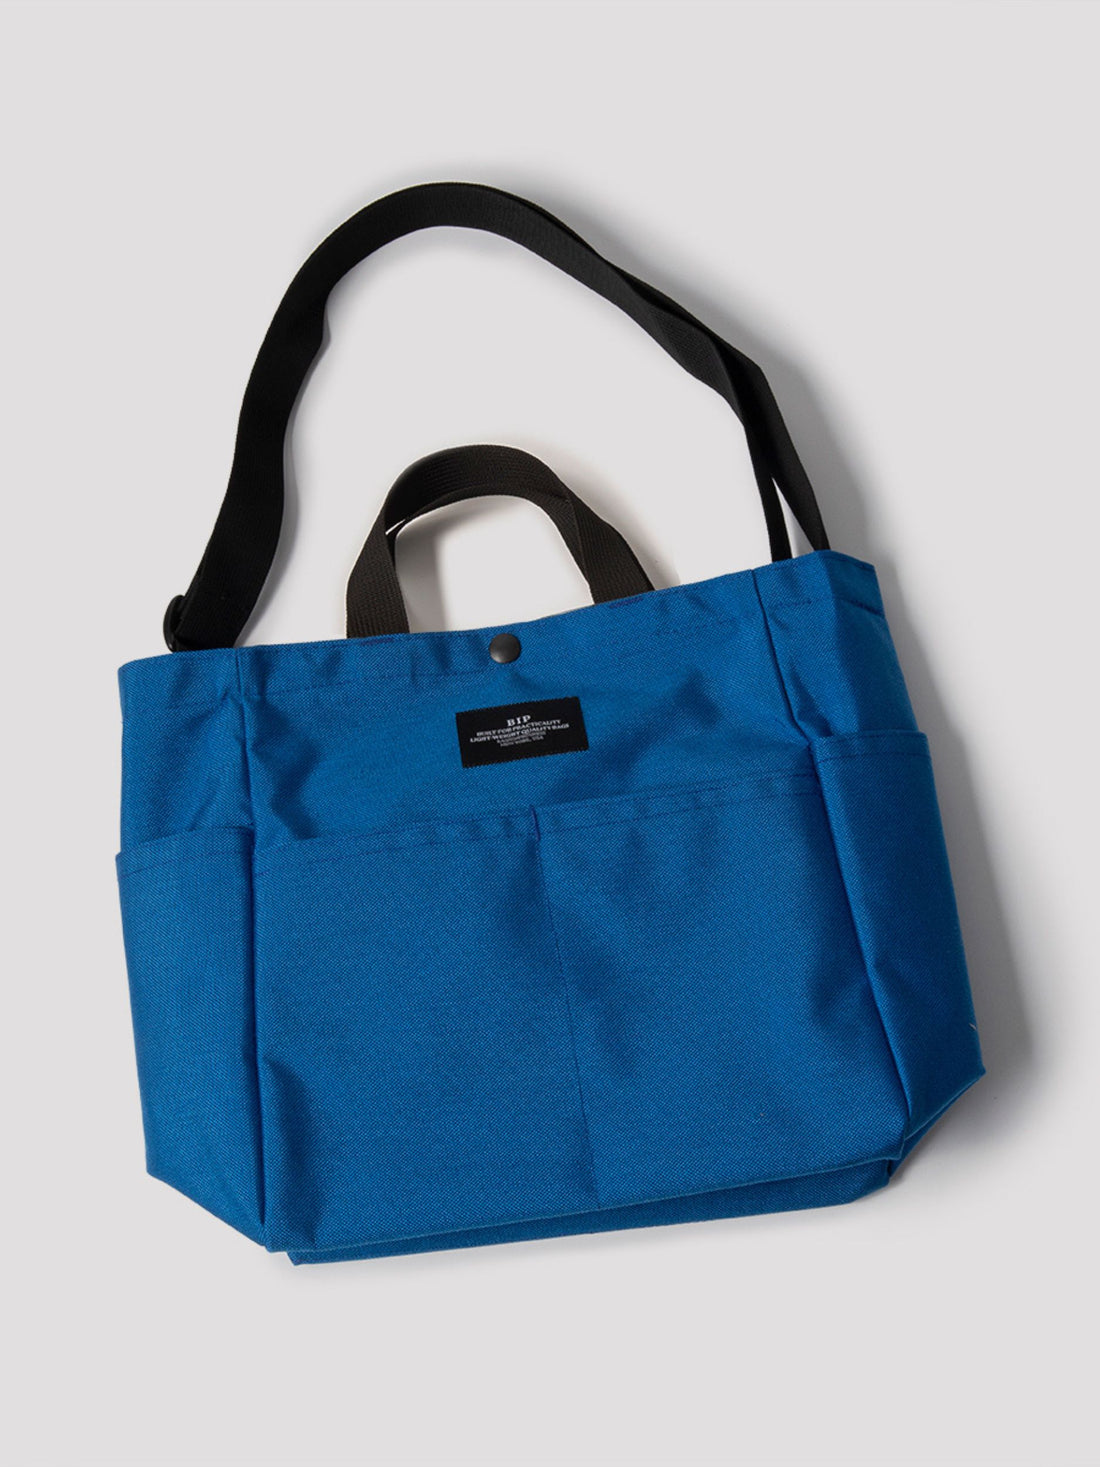 Multi pocket bag royal blue - Bags in Progress